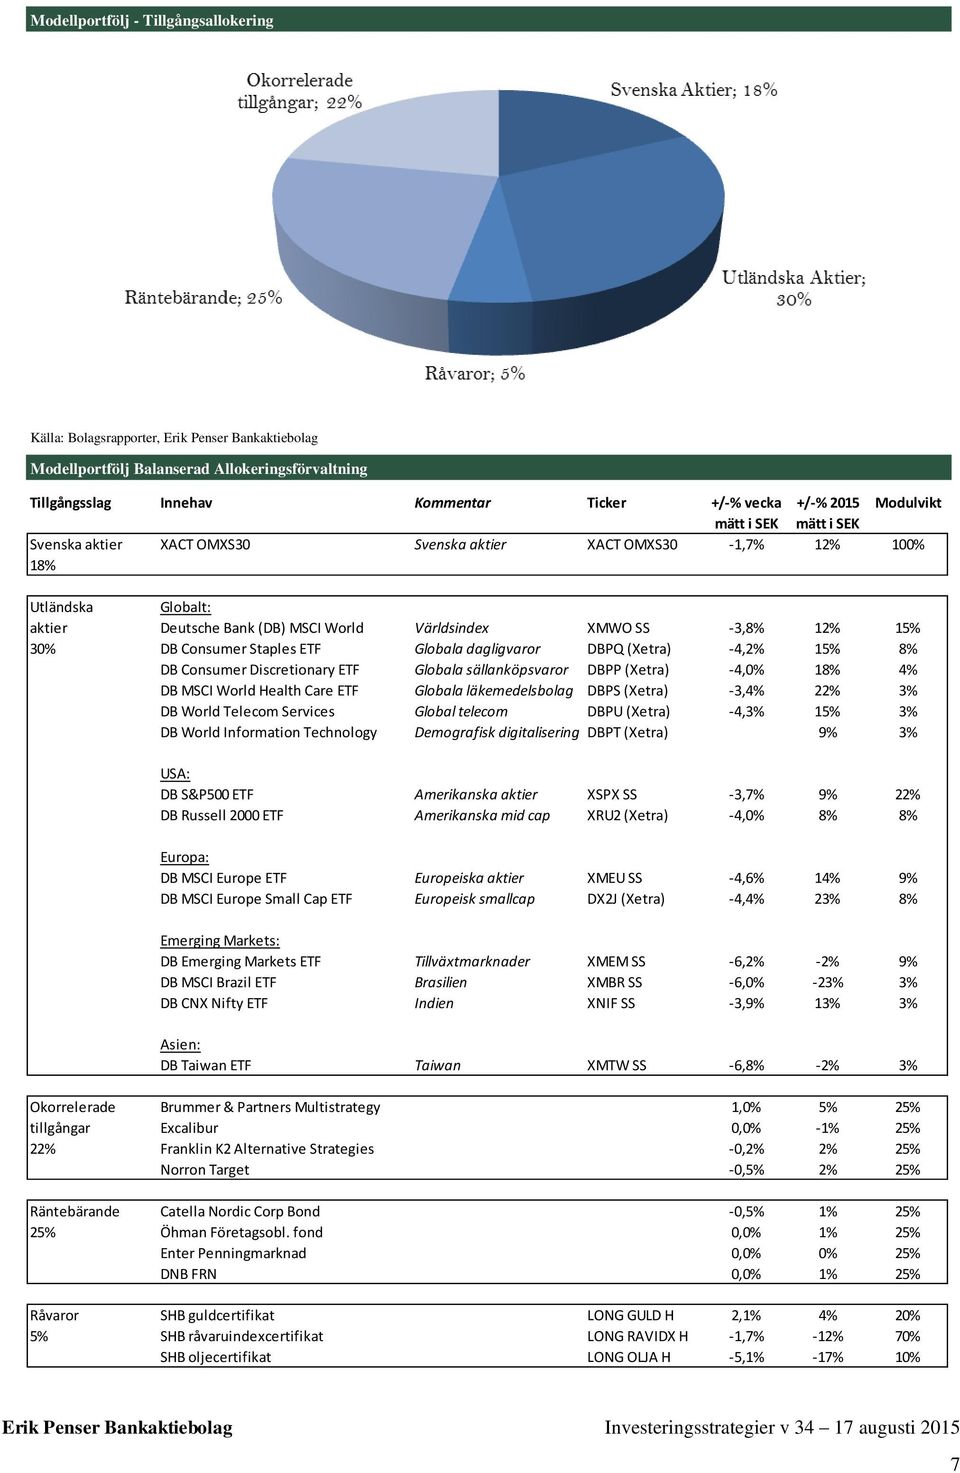 DB Consumer Staples ETF Globala dagligvaror DBPQ (Xetra) -4,2% 15% 8% DB Consumer Discretionary ETF Globala sällanköpsvaror DBPP (Xetra) -4,0% 18% 4% DB MSCI World Health Care ETF Globala